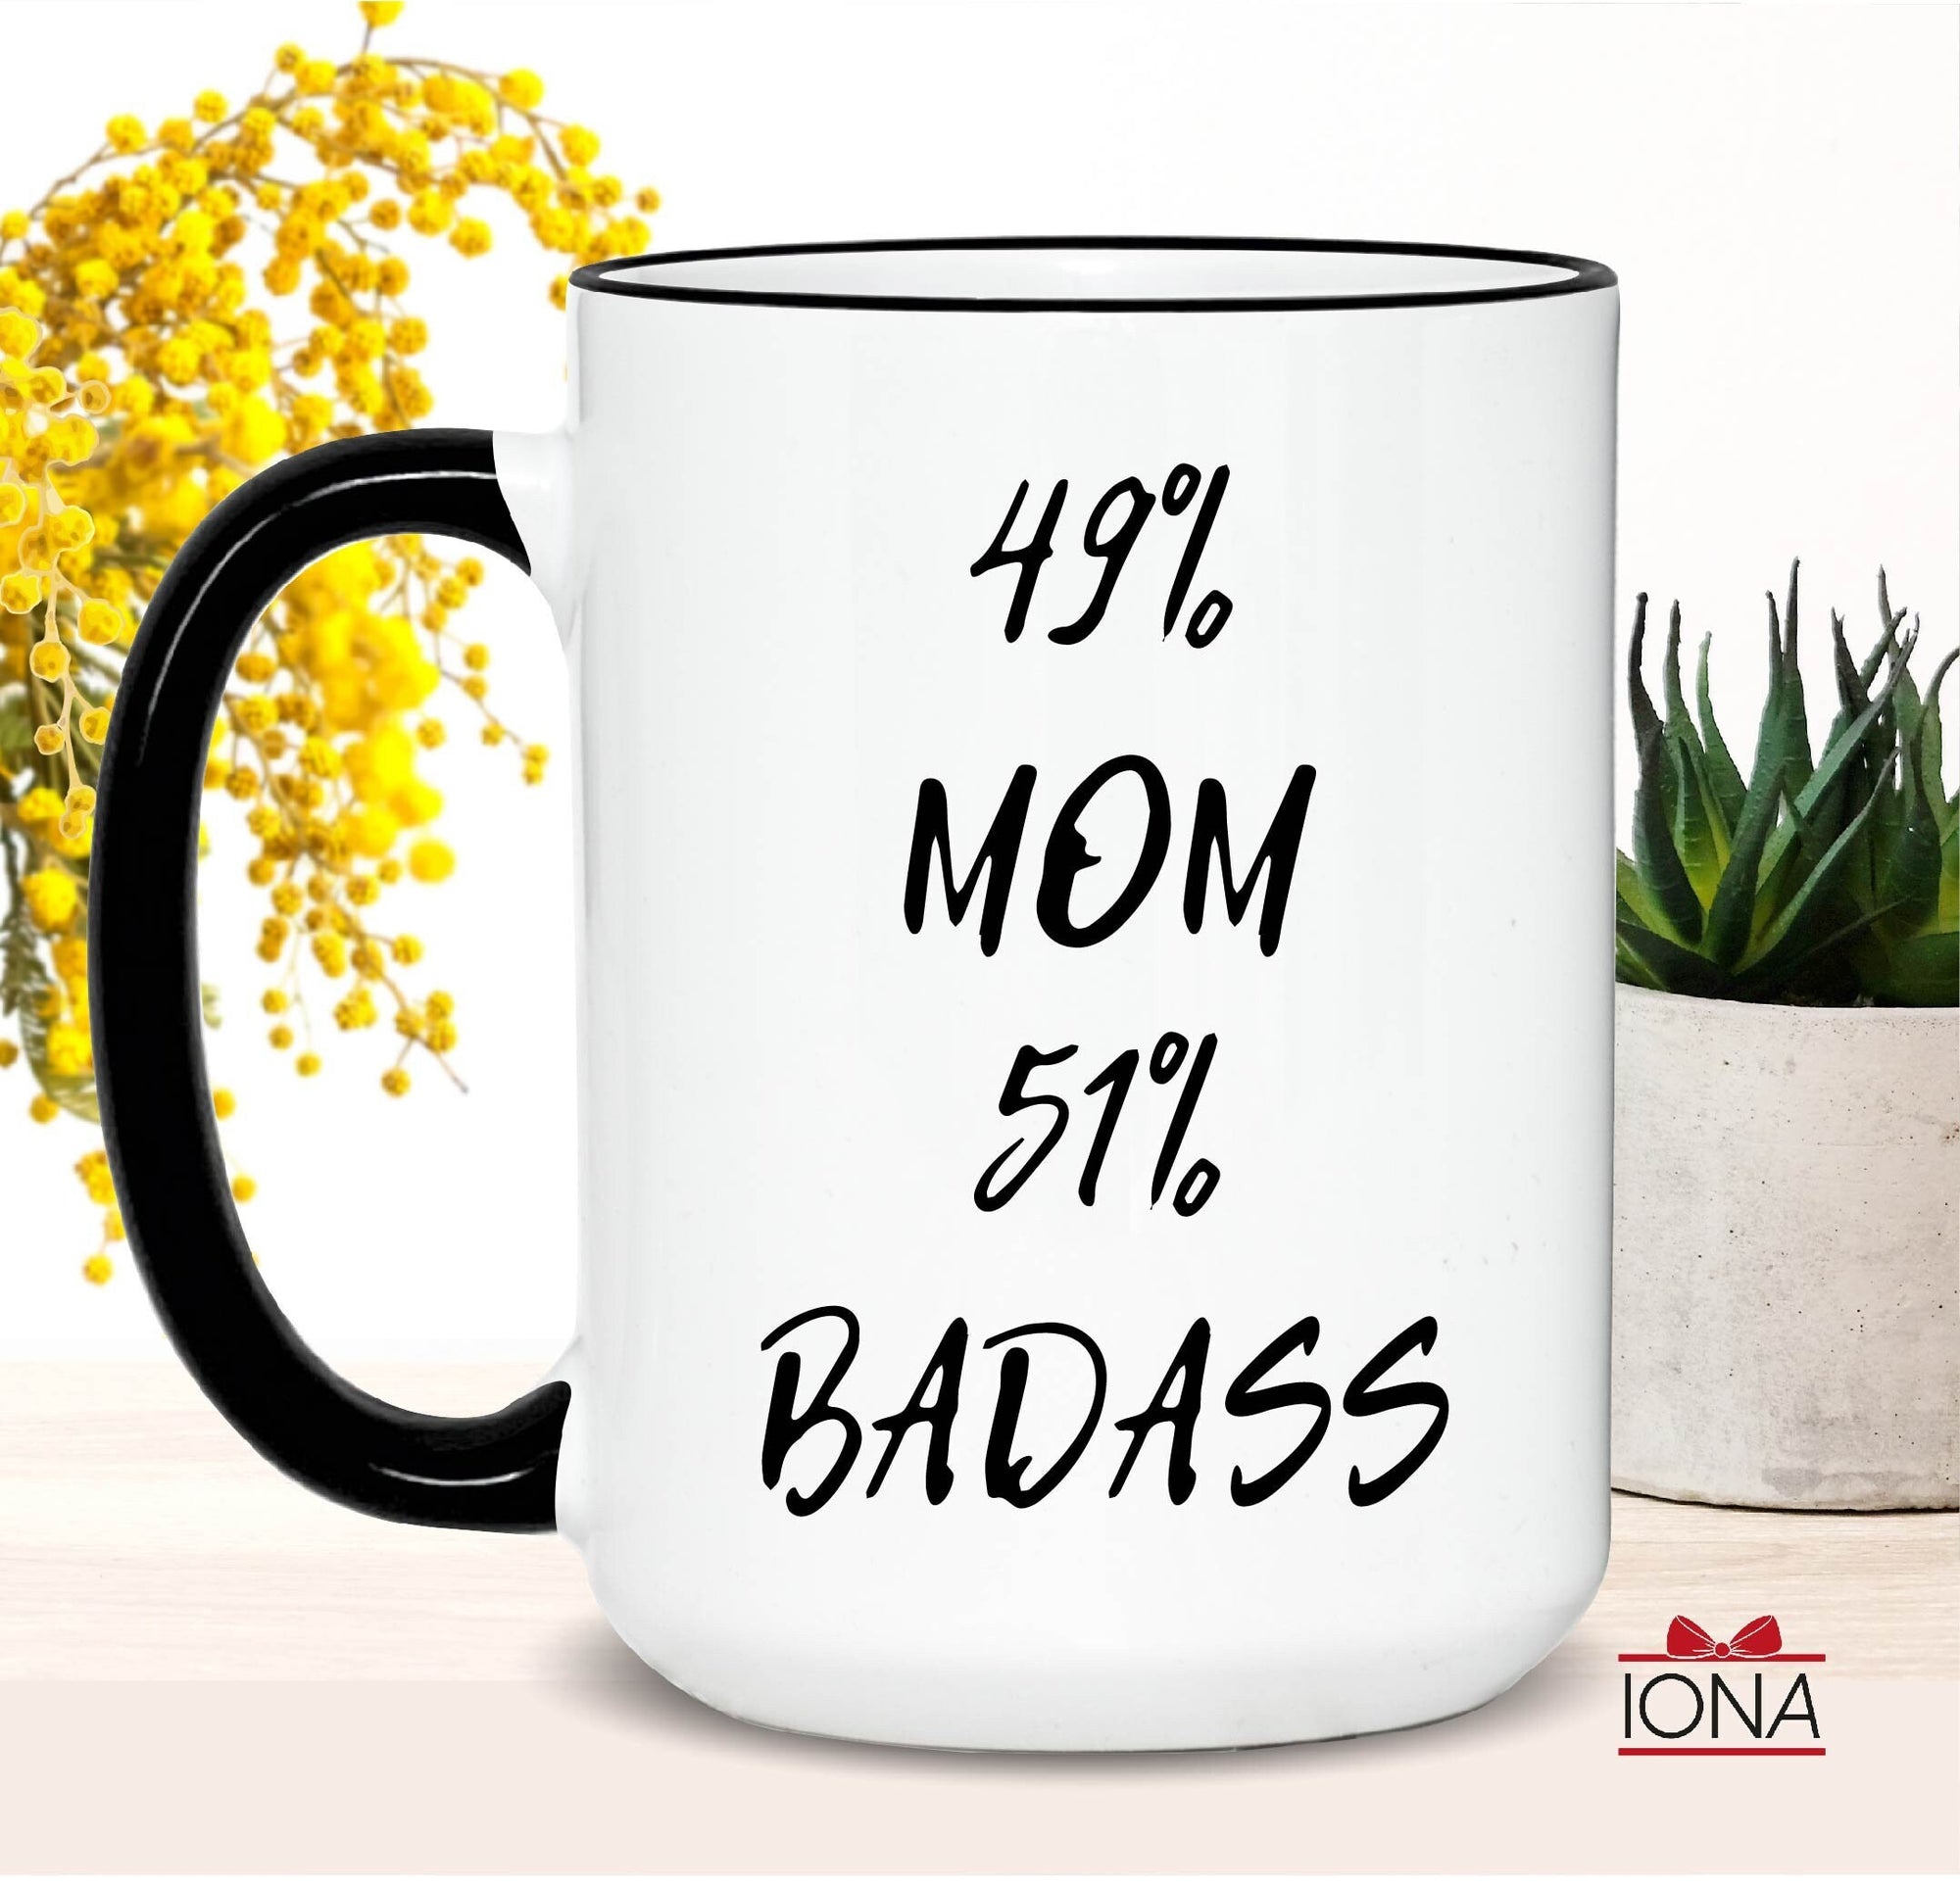 Mom Coffee Mug, Gift for Mom, Mother's Day Gift, Gift from Husband, Christmas Gift Mom, Gift Idea For Mom, Mom Coffee Mug, Badass Mom